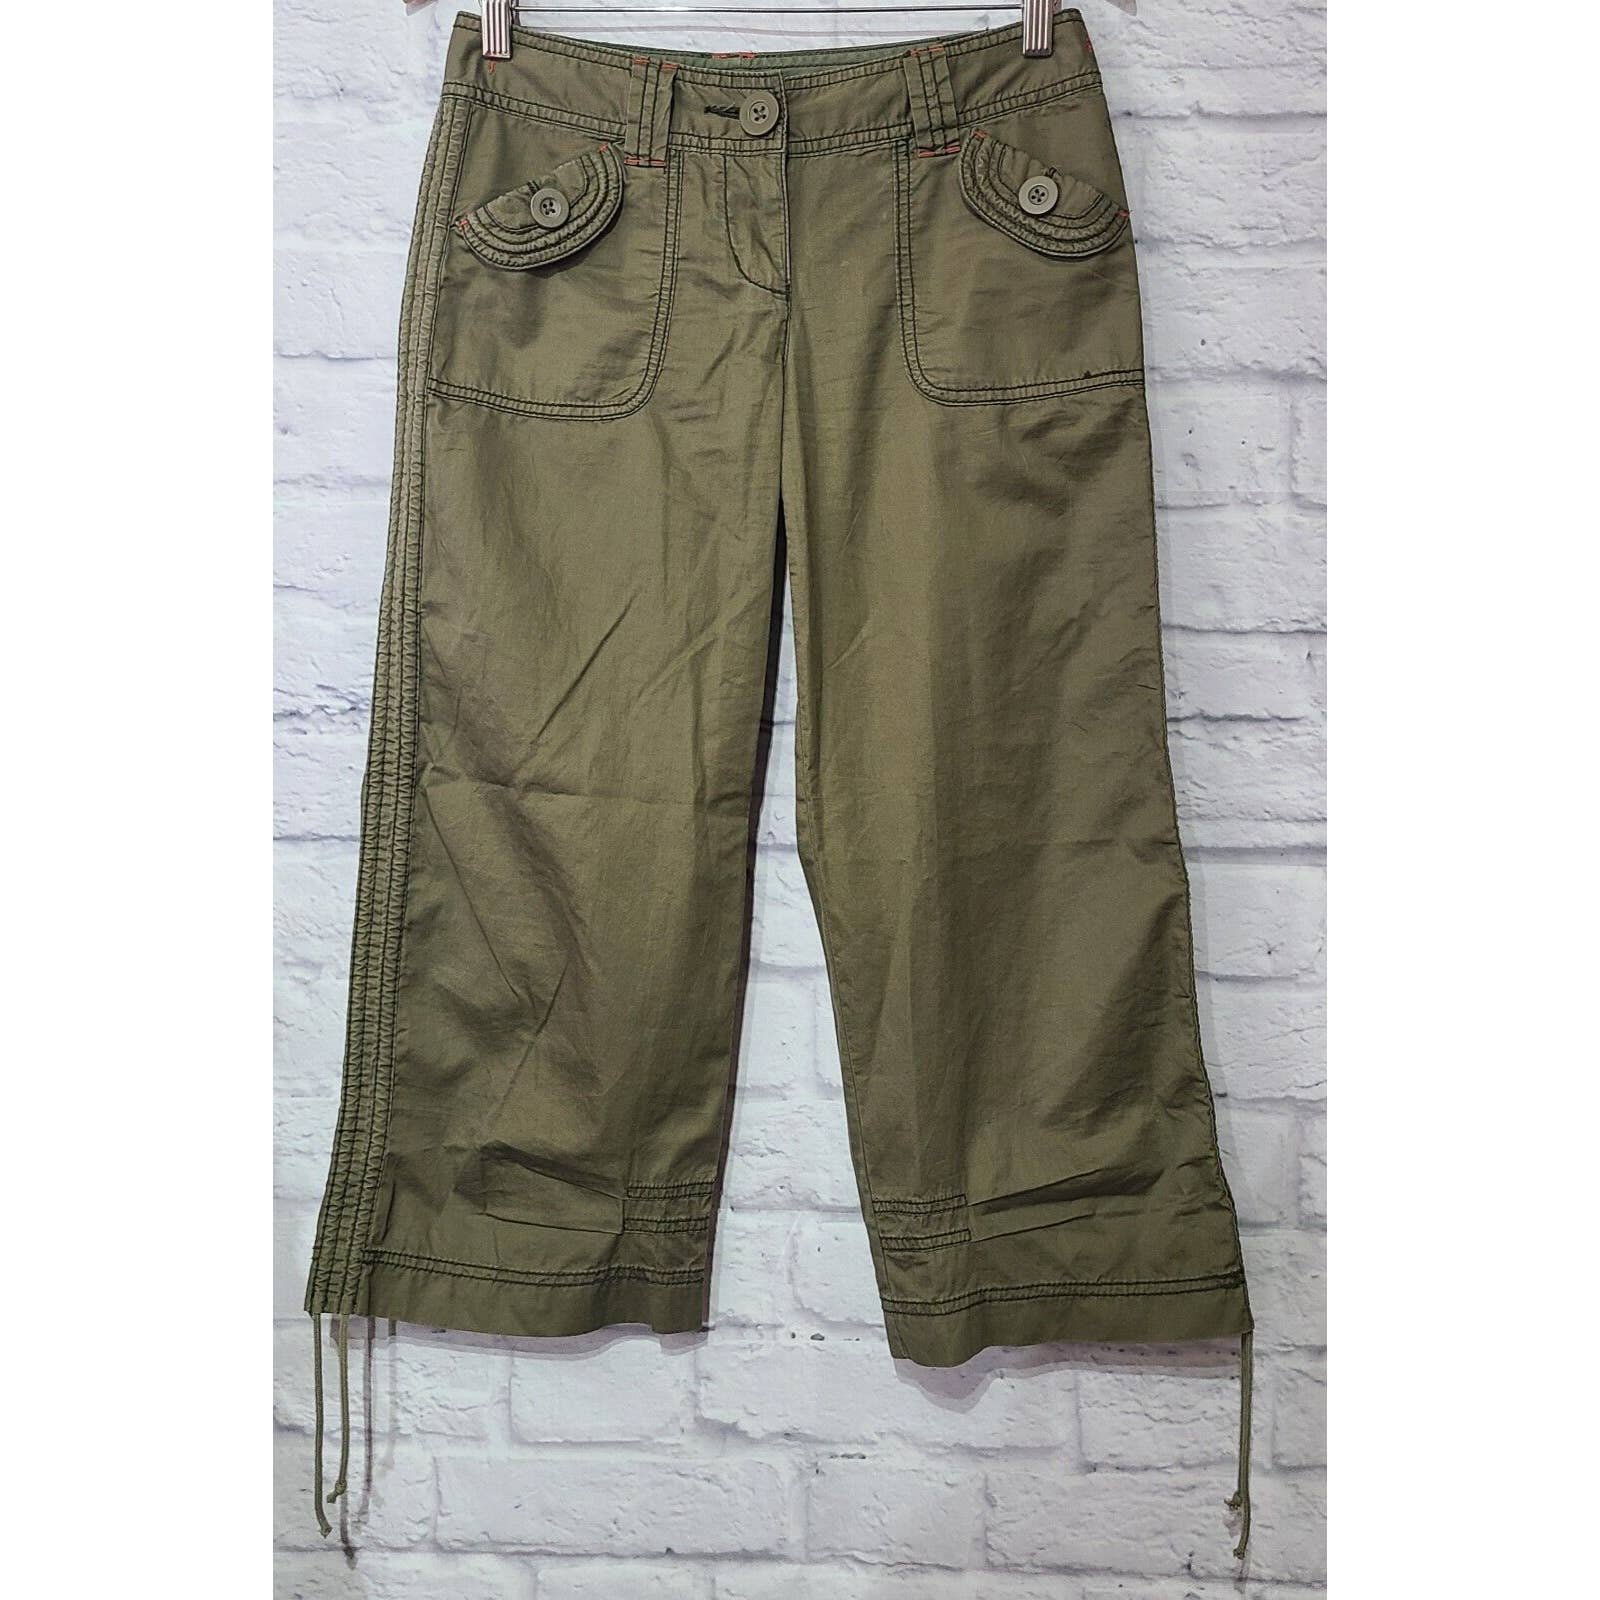 reasonable price Anthropologie Hei Hei Capri Pants Women´s 2 Olive Green Leg Drawstrings Pockets IHIwcgiOS Factory Price